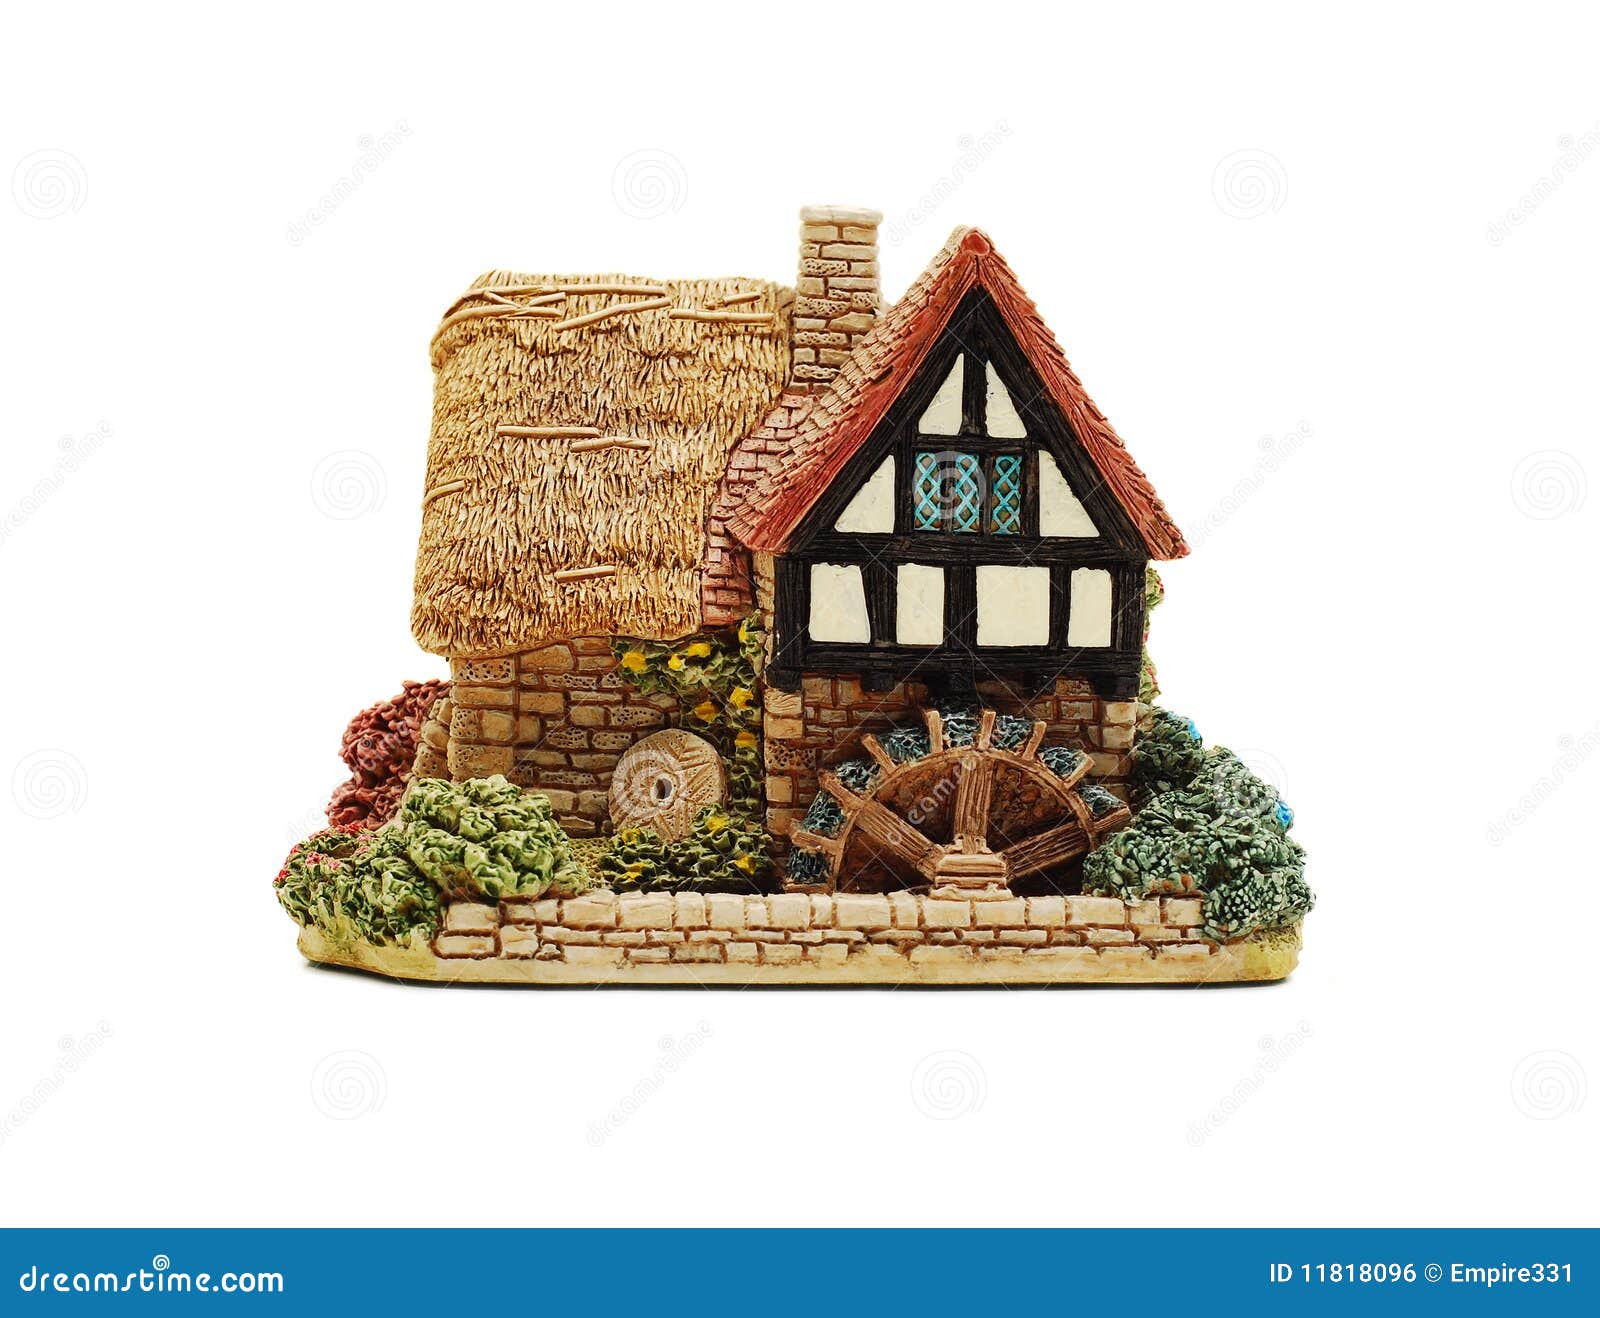 Miniature House Model Royalty Free Stock Image Image 